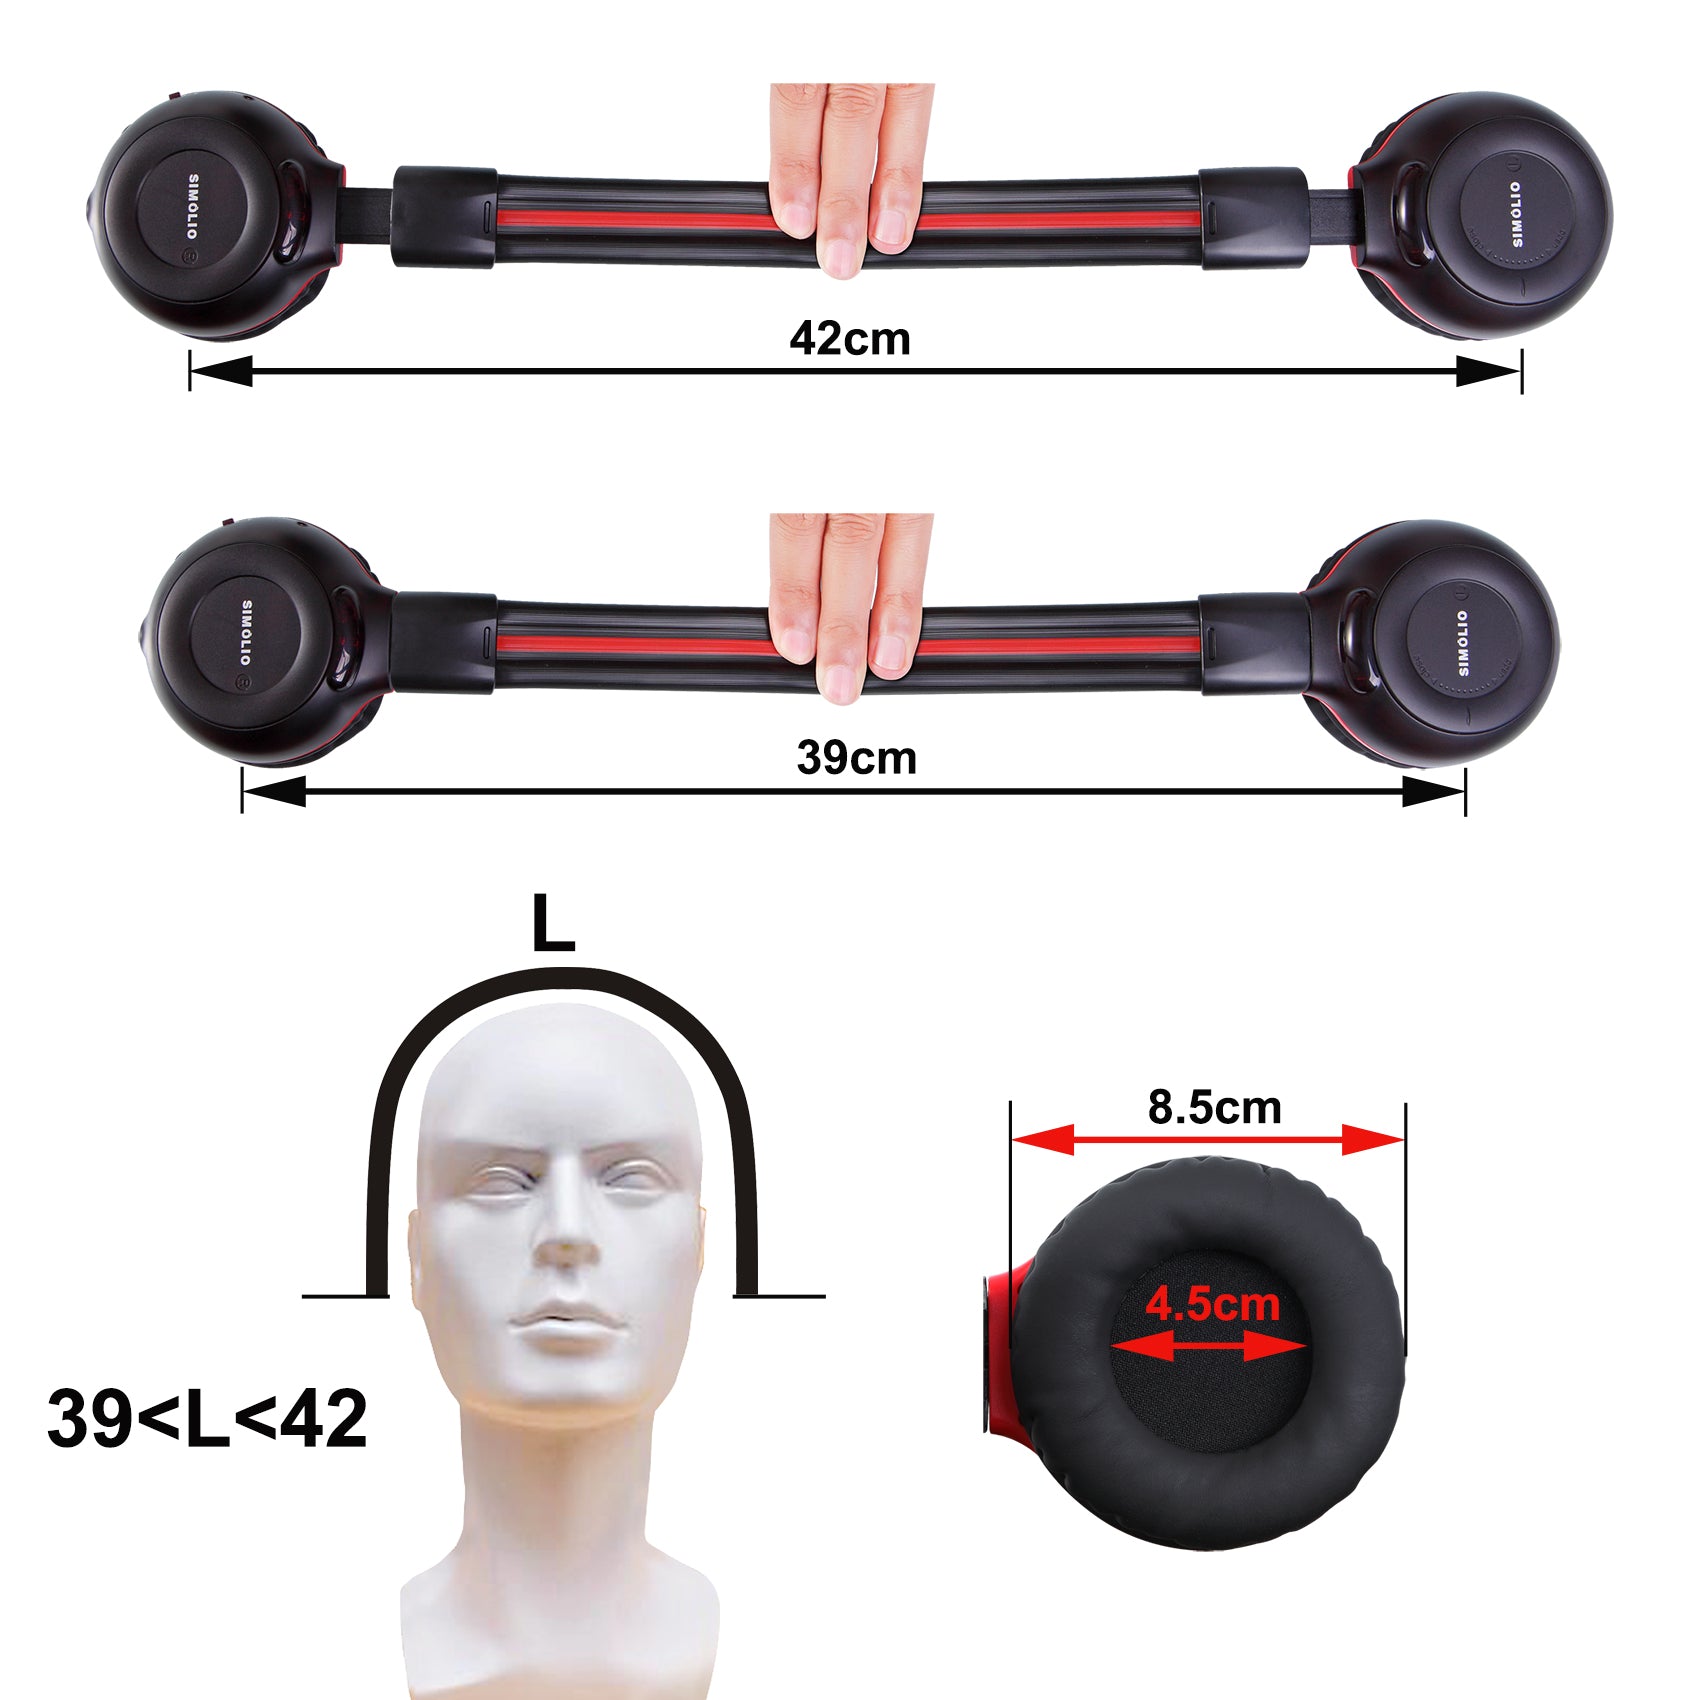 SIMOLIO SM-561O2 wireless car headphones with dual channels adjustable